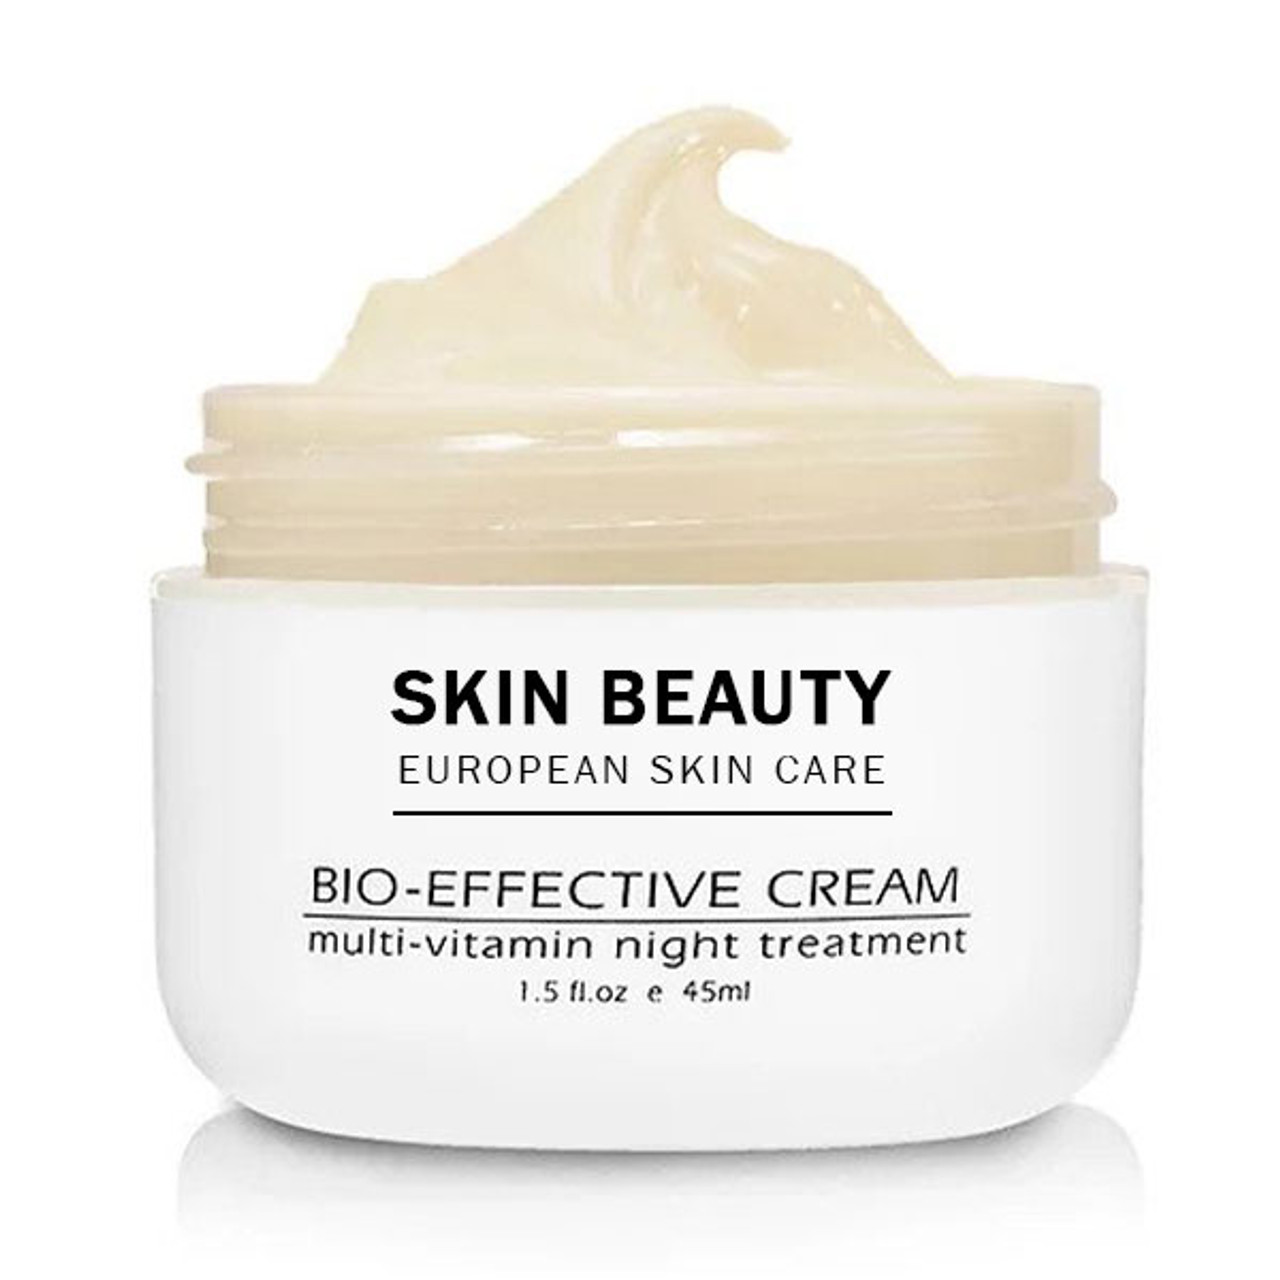 Skin Beauty Bio-Effective Cream | Night Treatment For Wrinkles